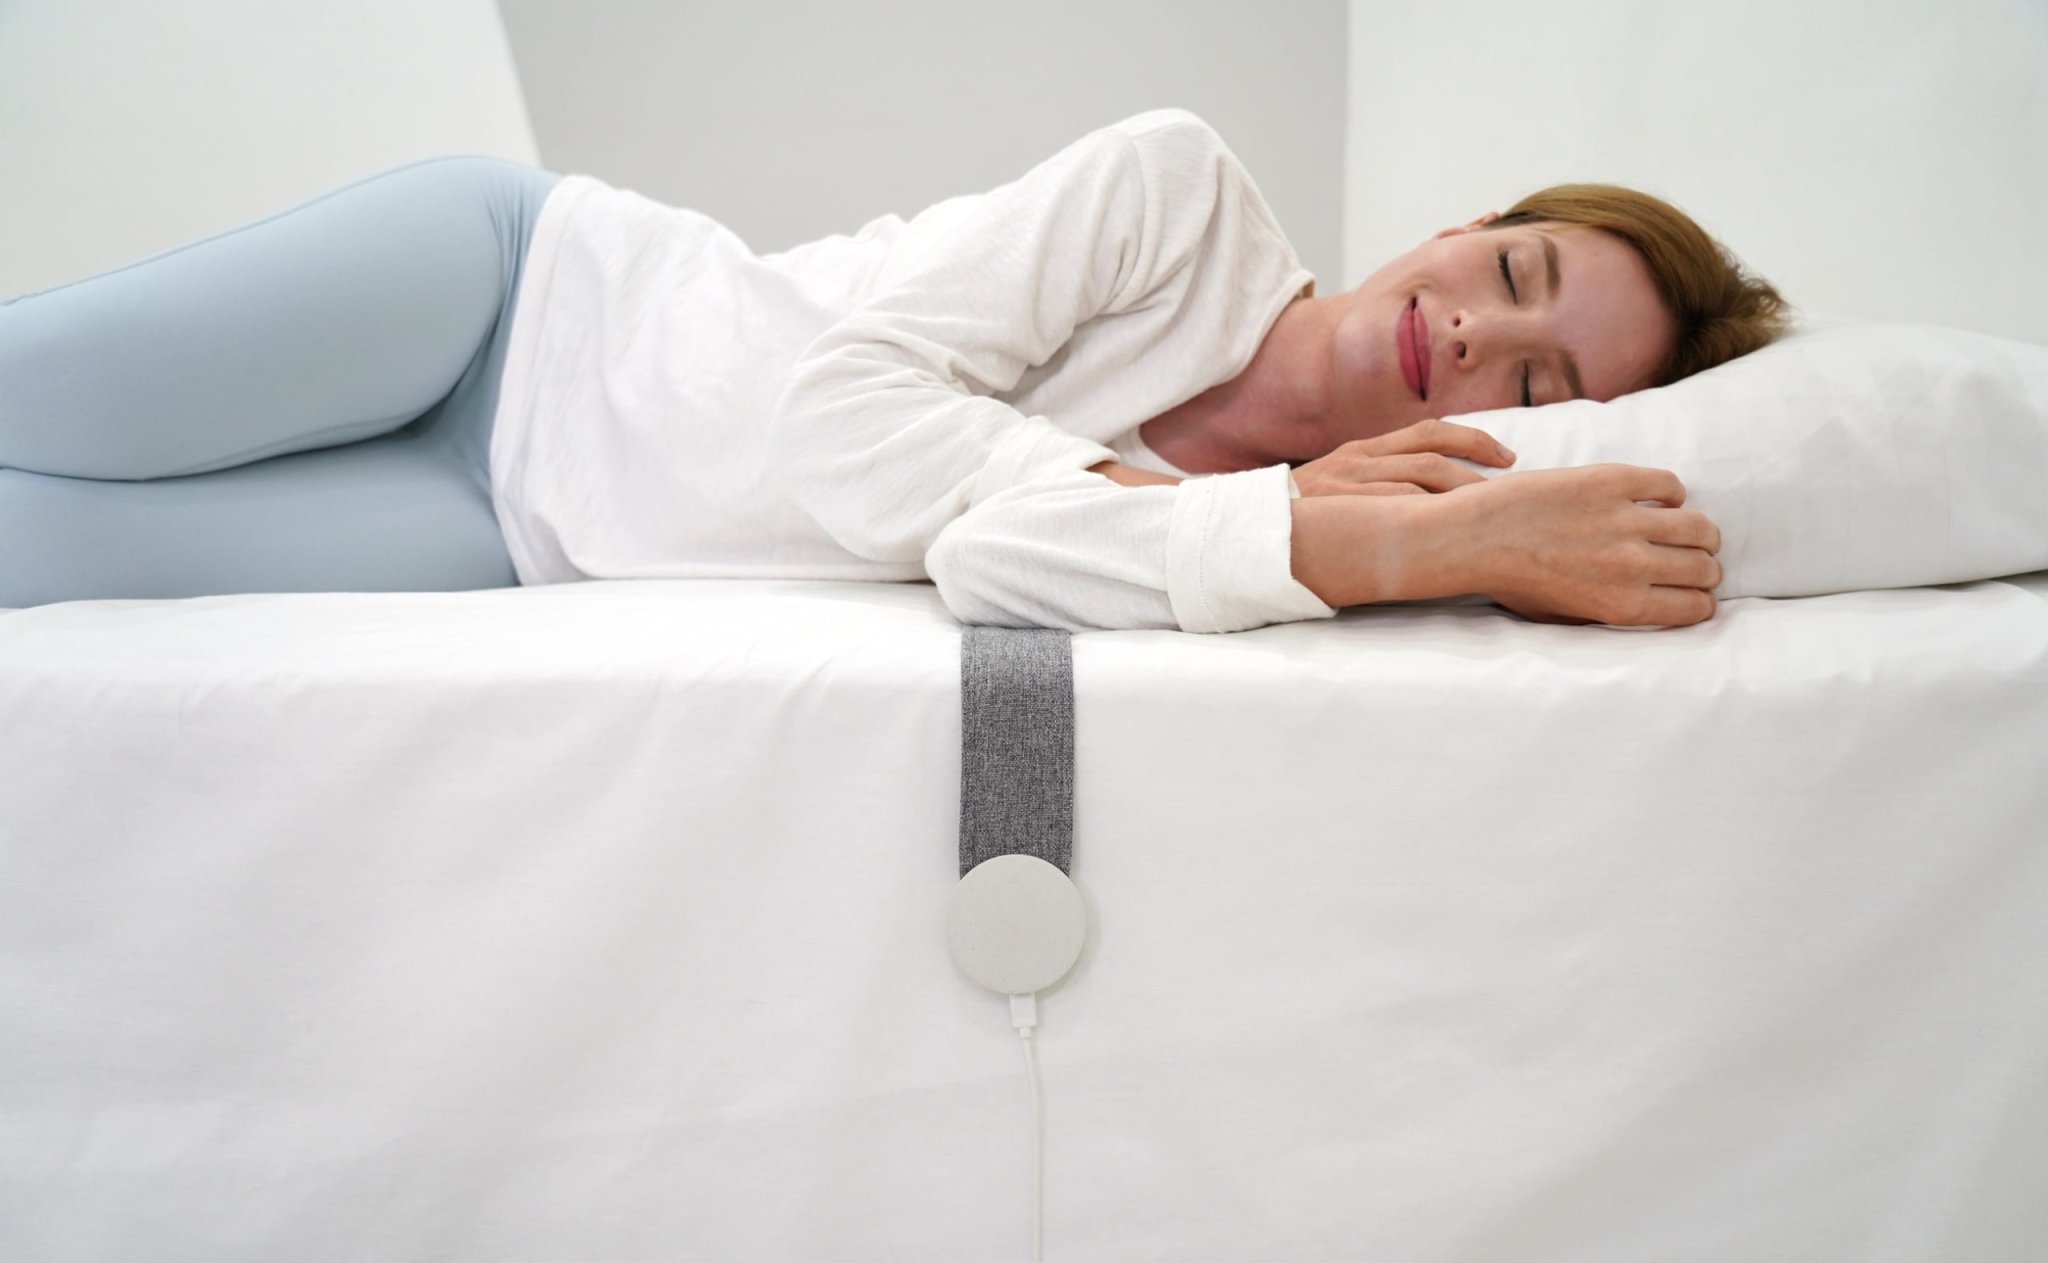 RESPIO Accurate Biometric Sleep Coach uses intelligent tracking to help you sleep better